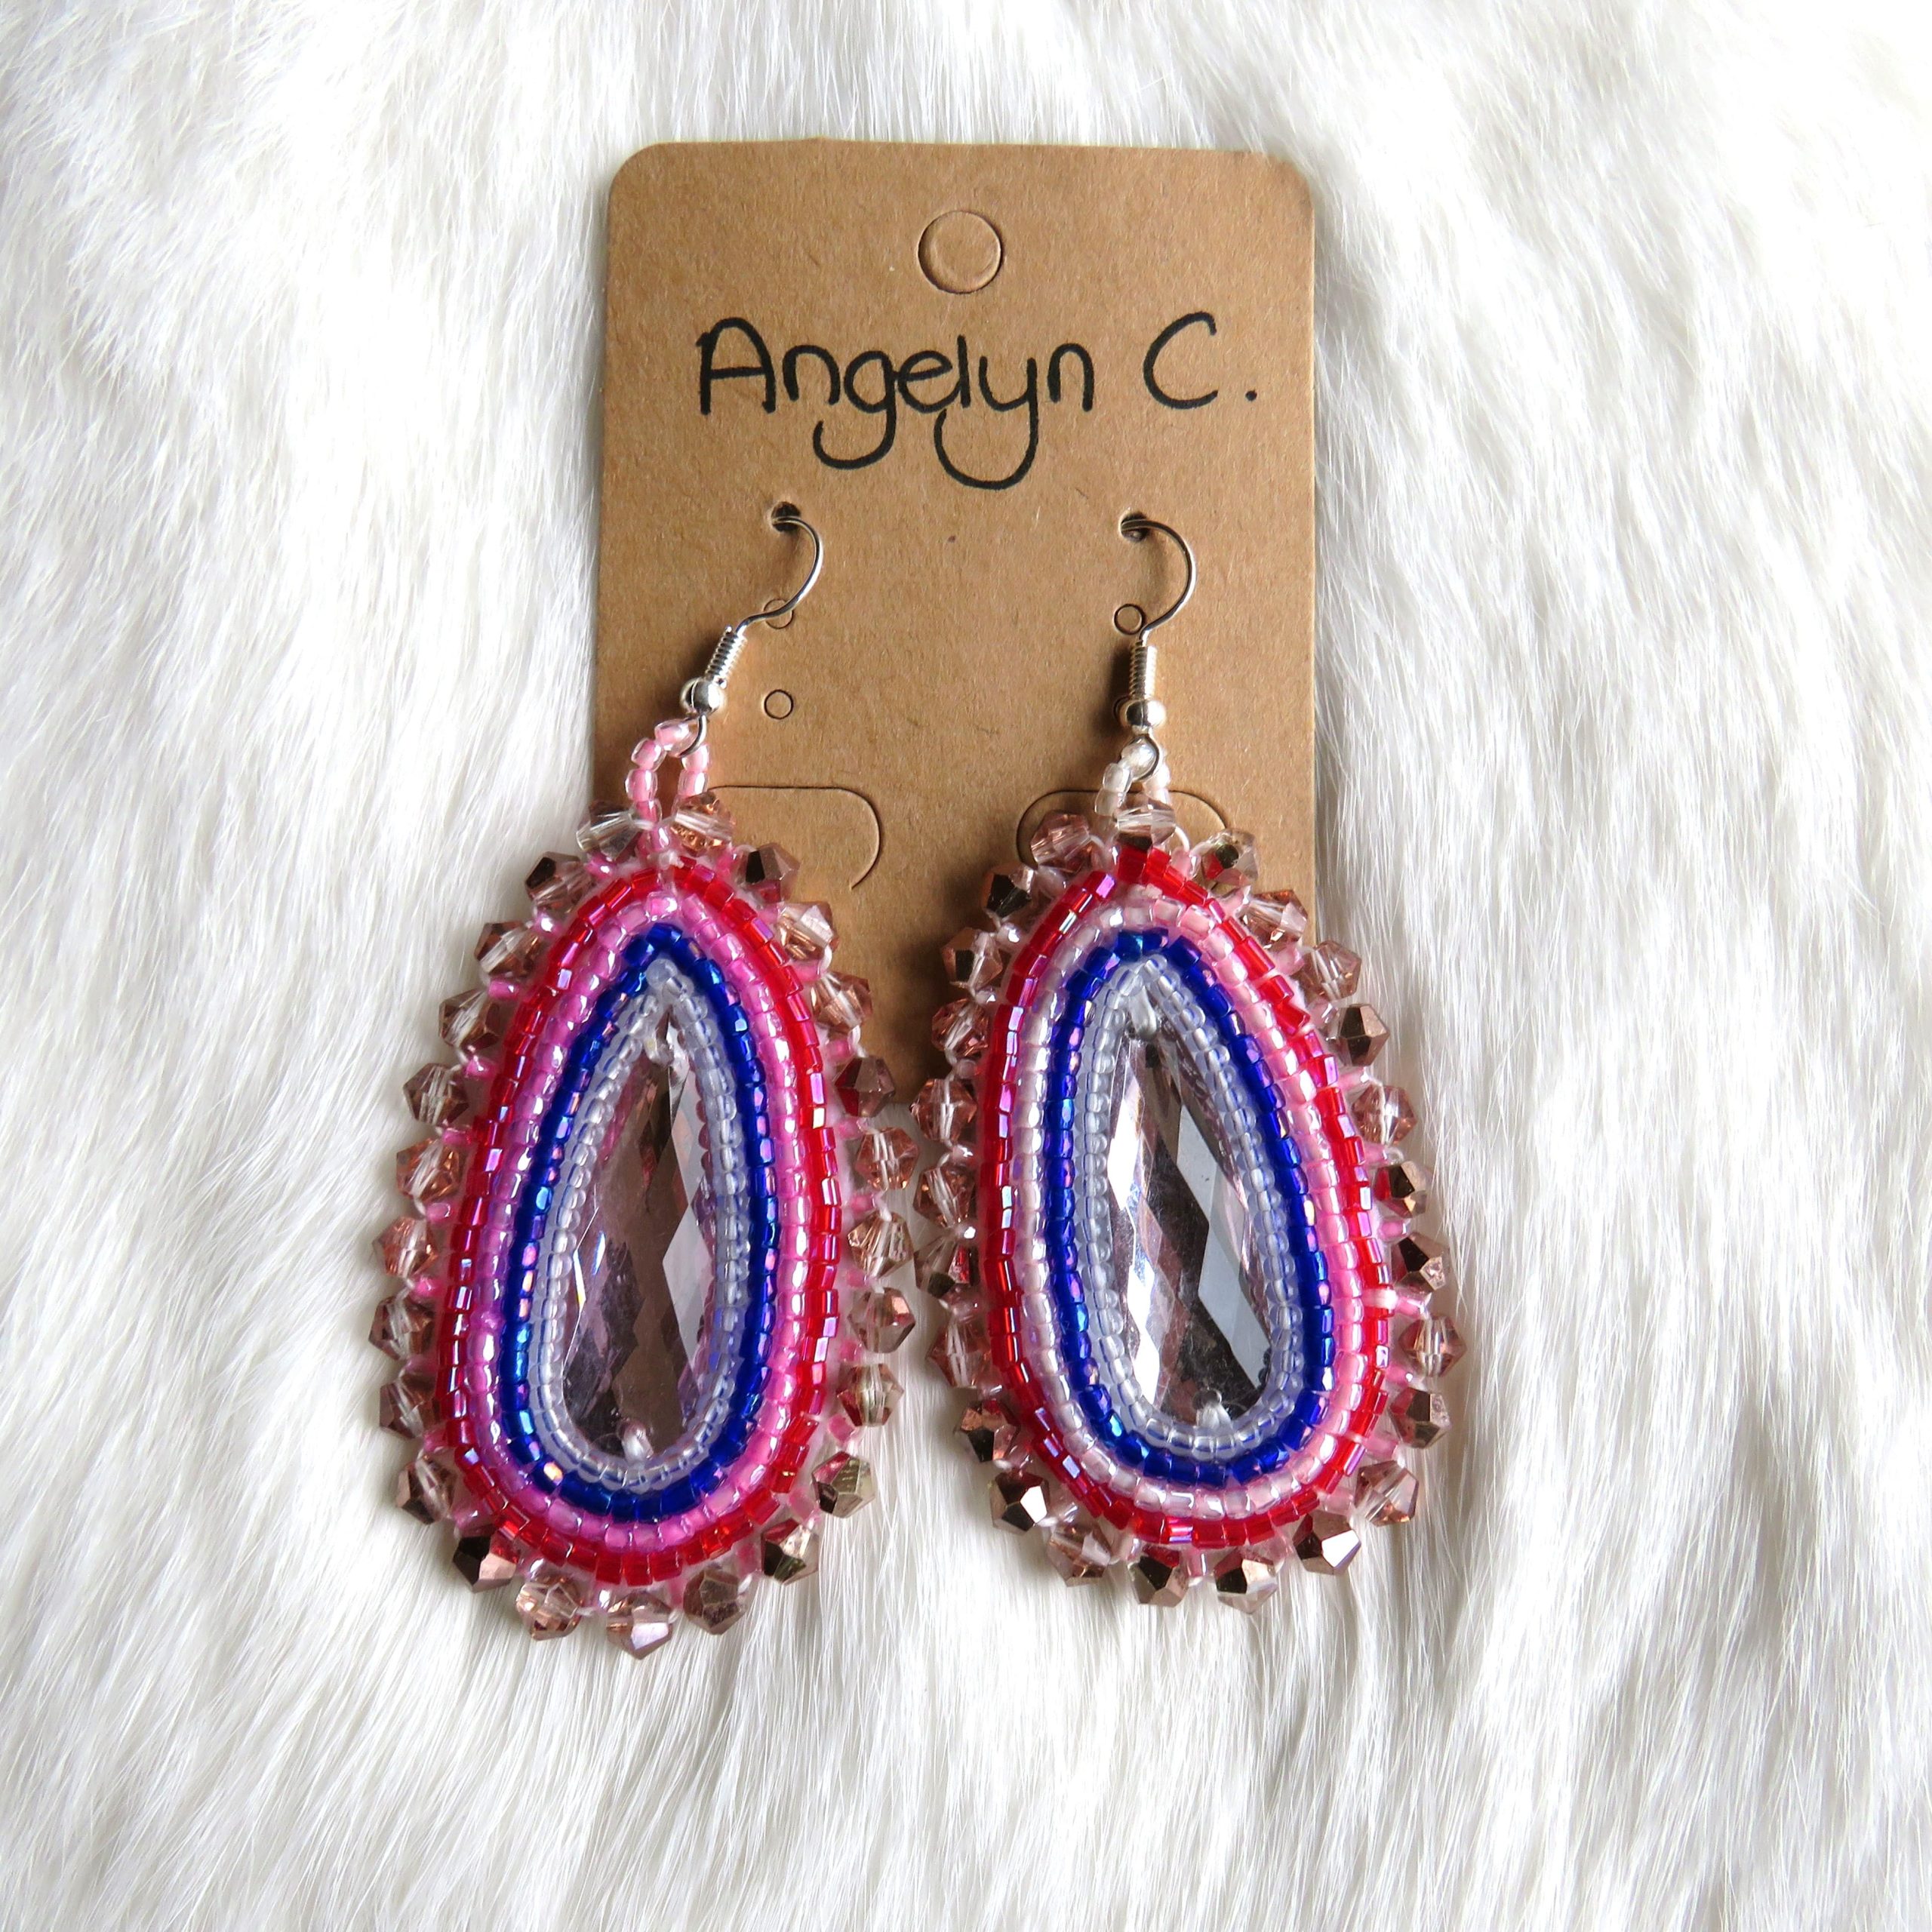 Authentieke ovale kralenwerk oorbellen paars/roze Angelyn (KIOWA)